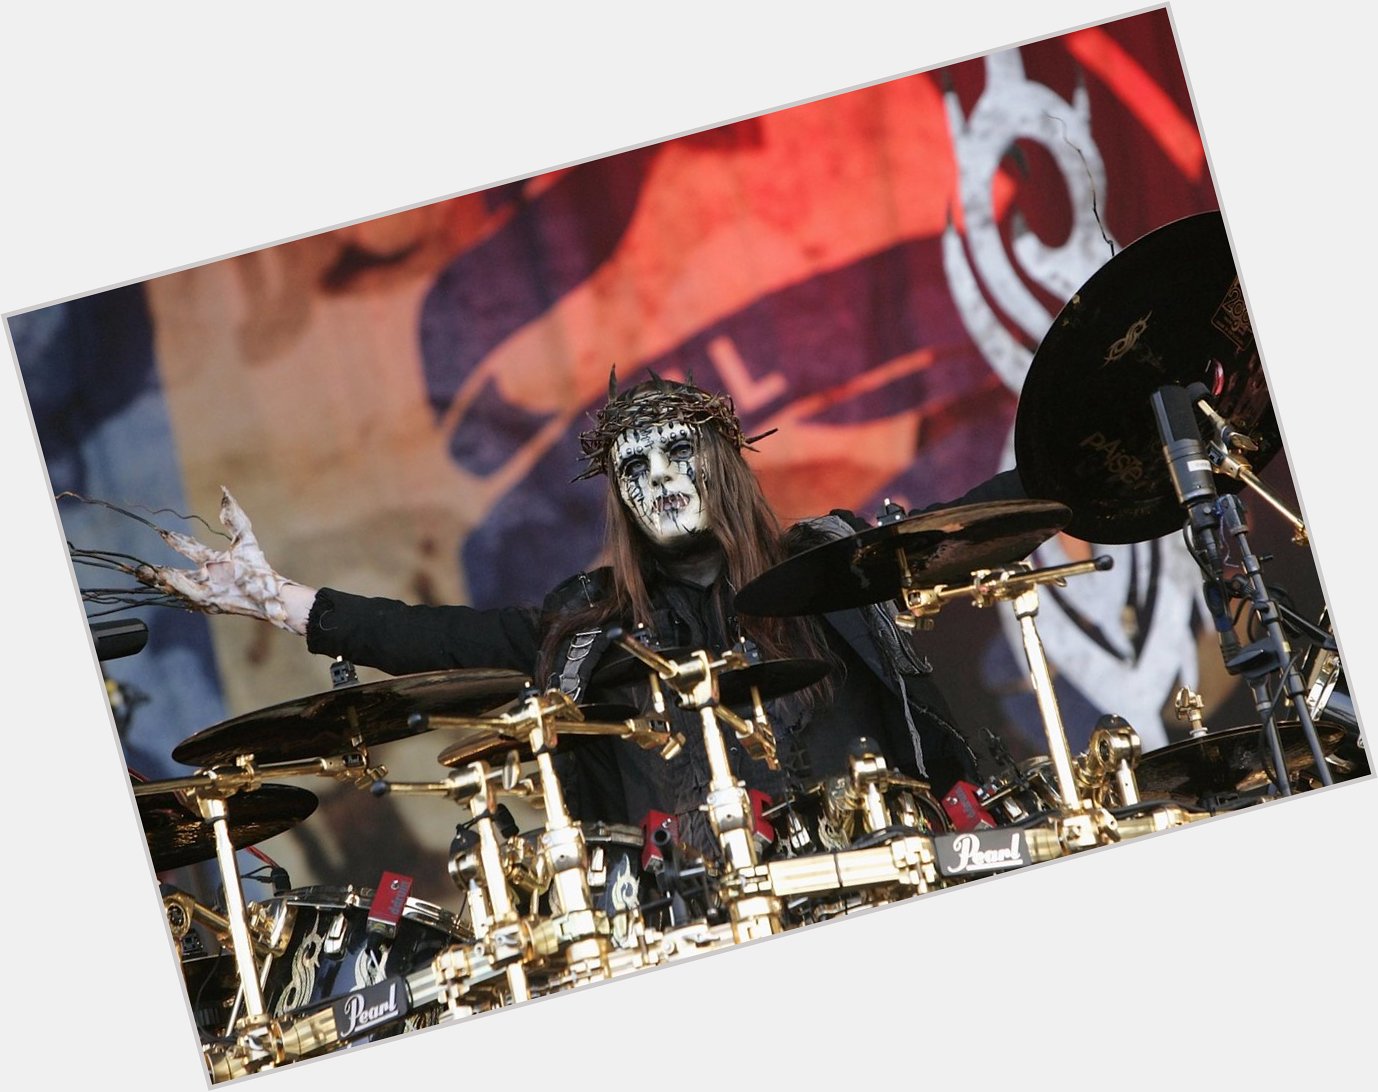 Happy birthday to a drumming legend, Joey Jordison!   I still miss you sooooo much R.I.P 